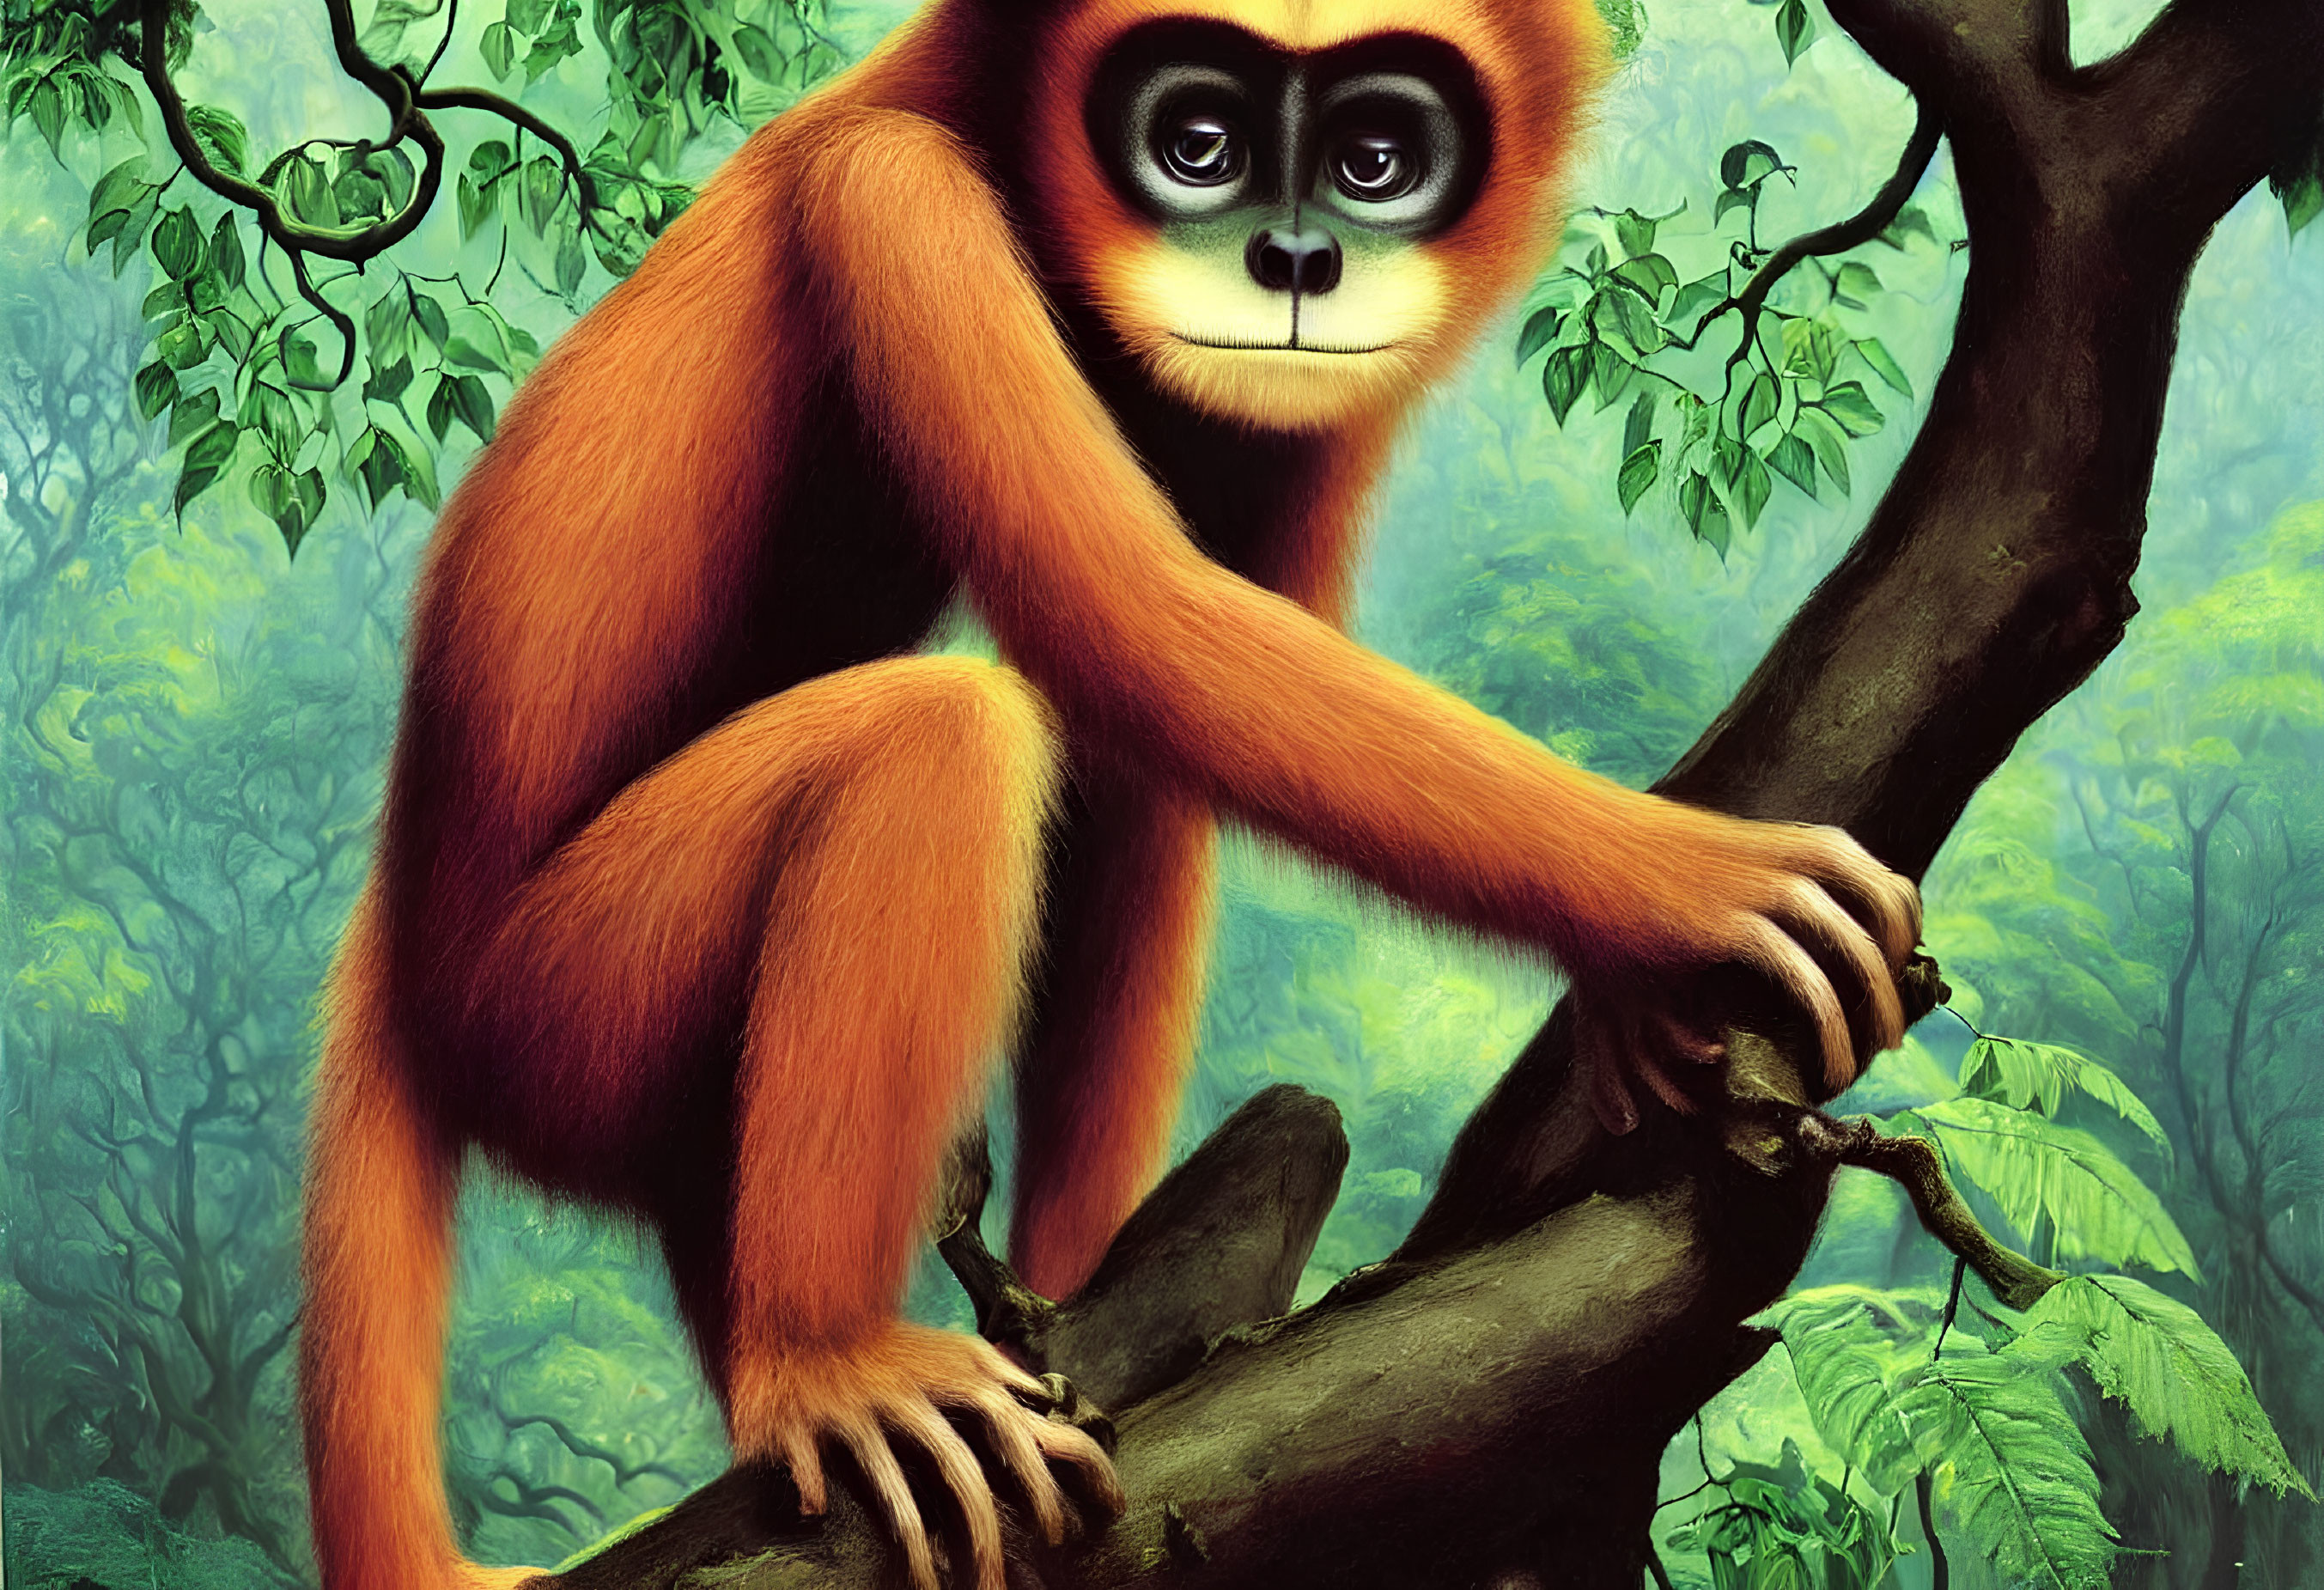 Illustration of expressive-eyed orange monkey on tree branch in green forest